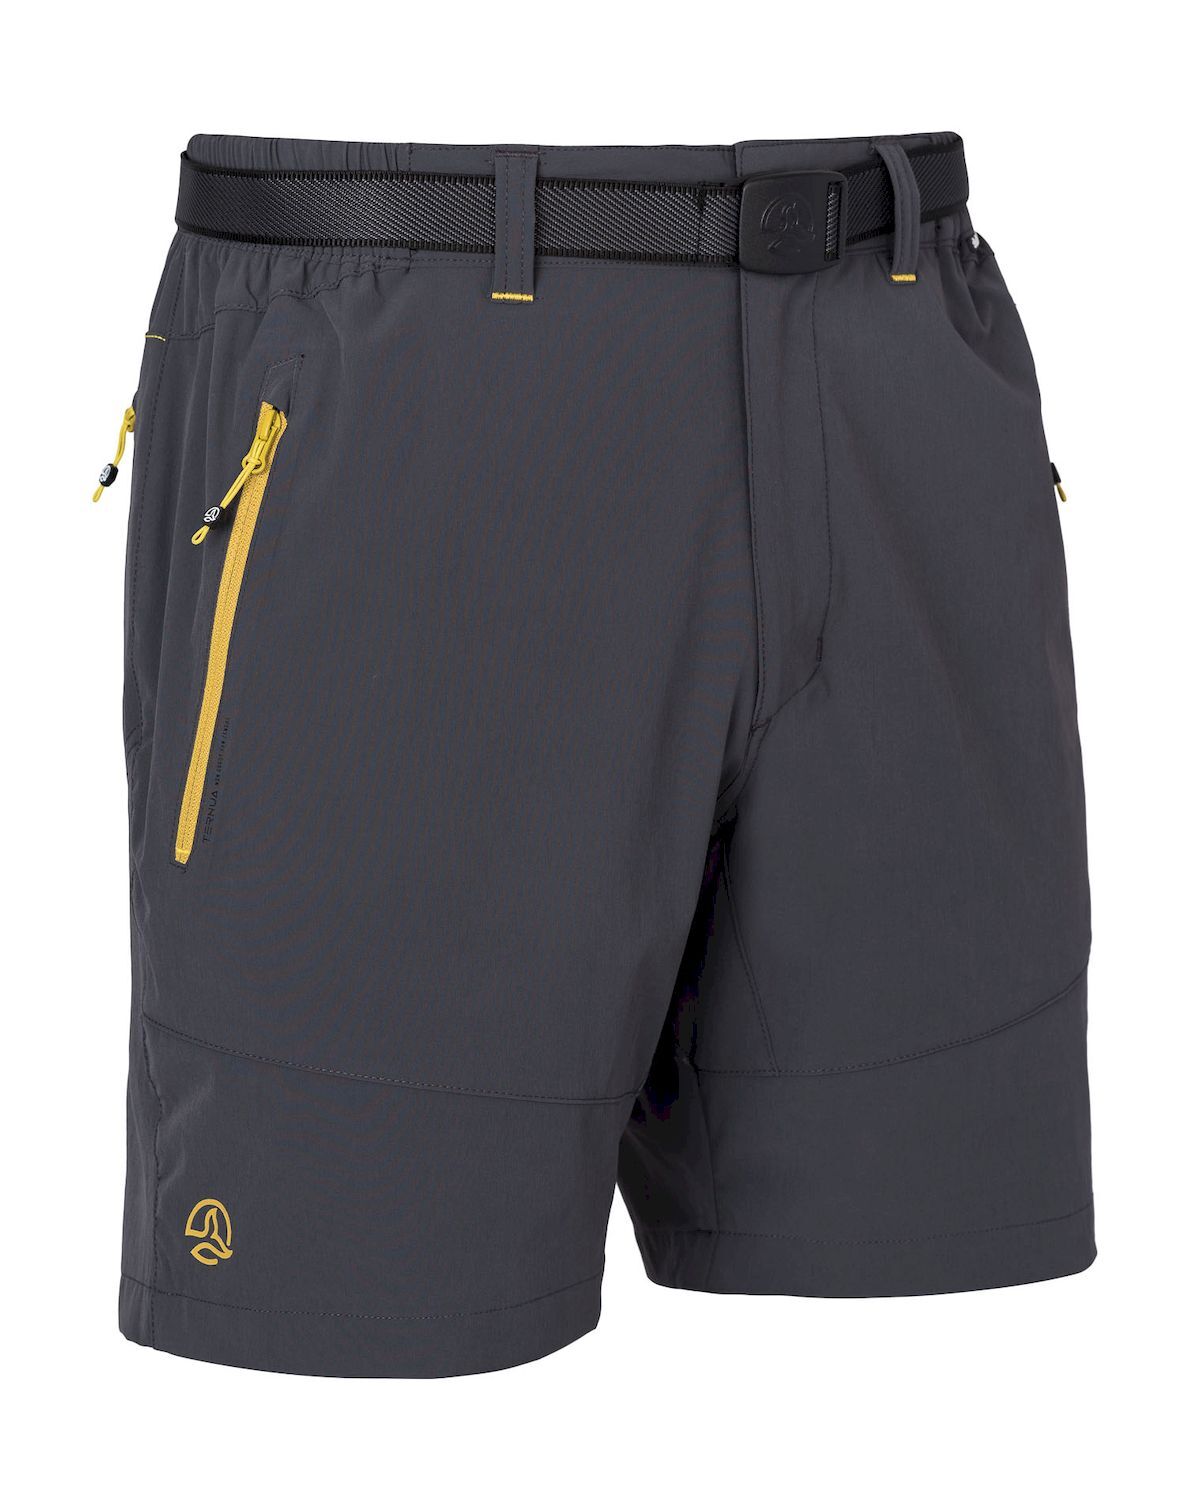 Ternua Friz Short - Walking shorts - Men's